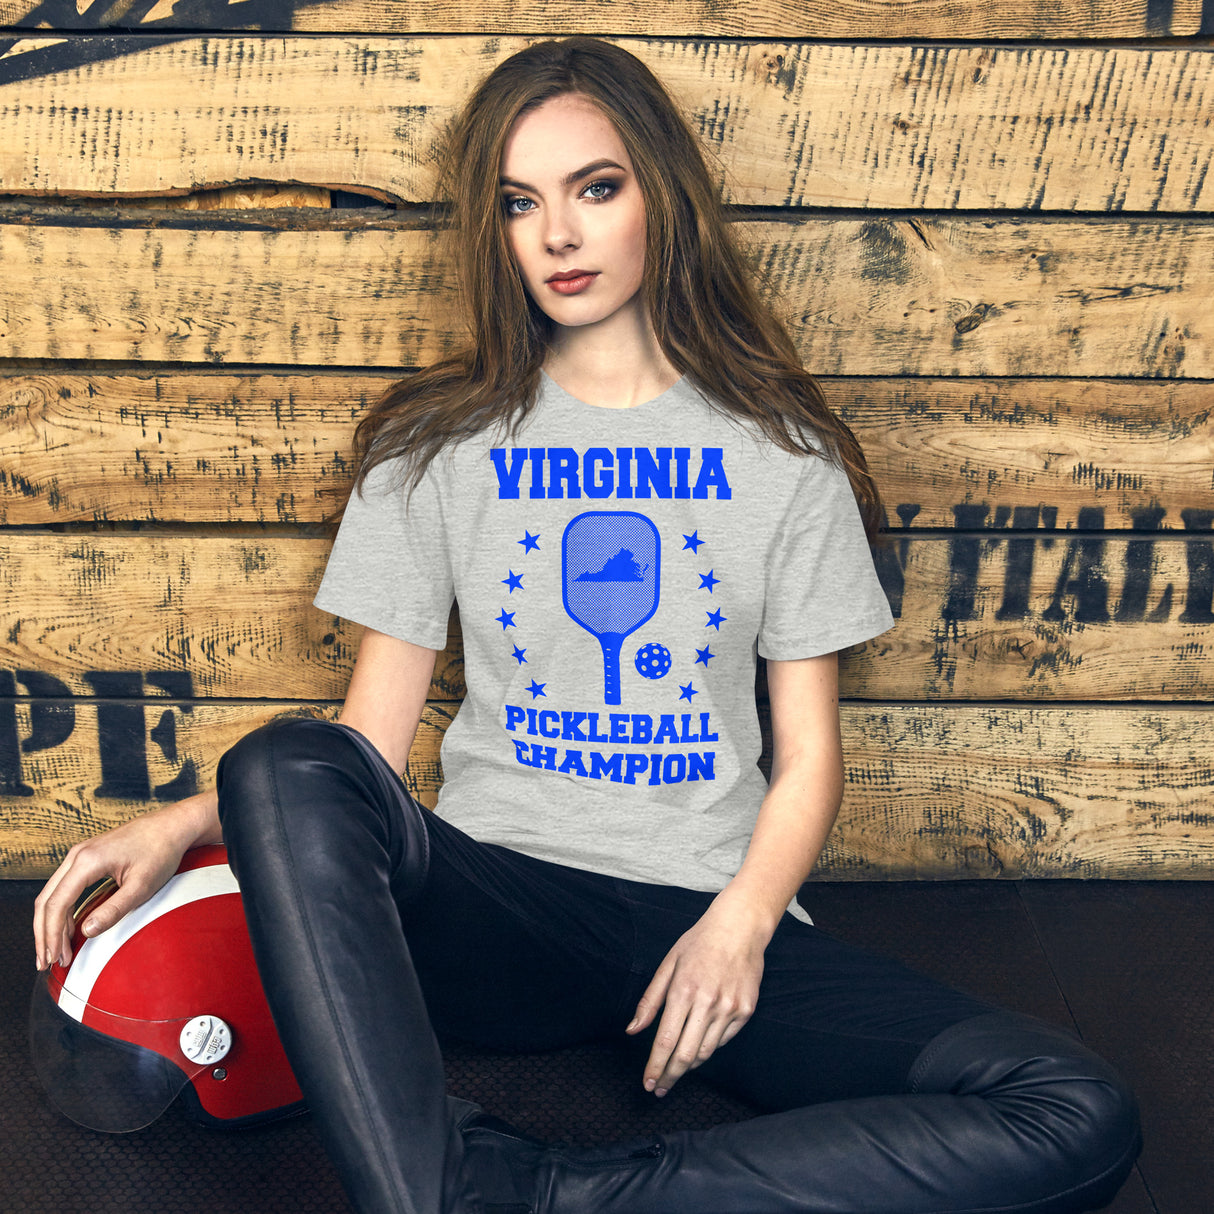 Virginia Pickleball Champion Women's Shirt